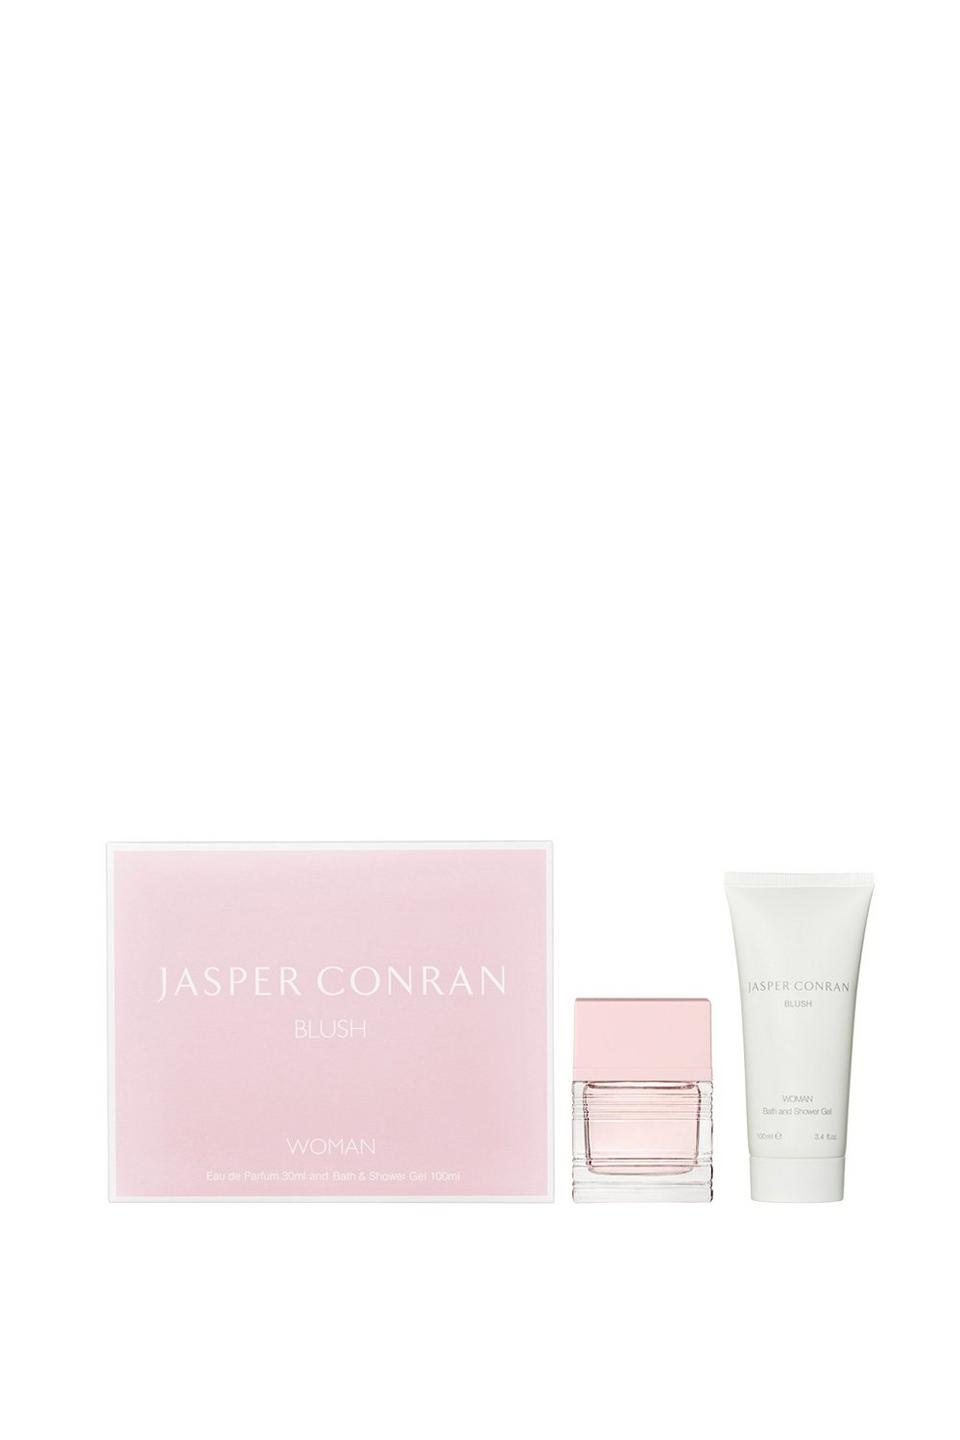 jasper conran blush woman eau de parfum